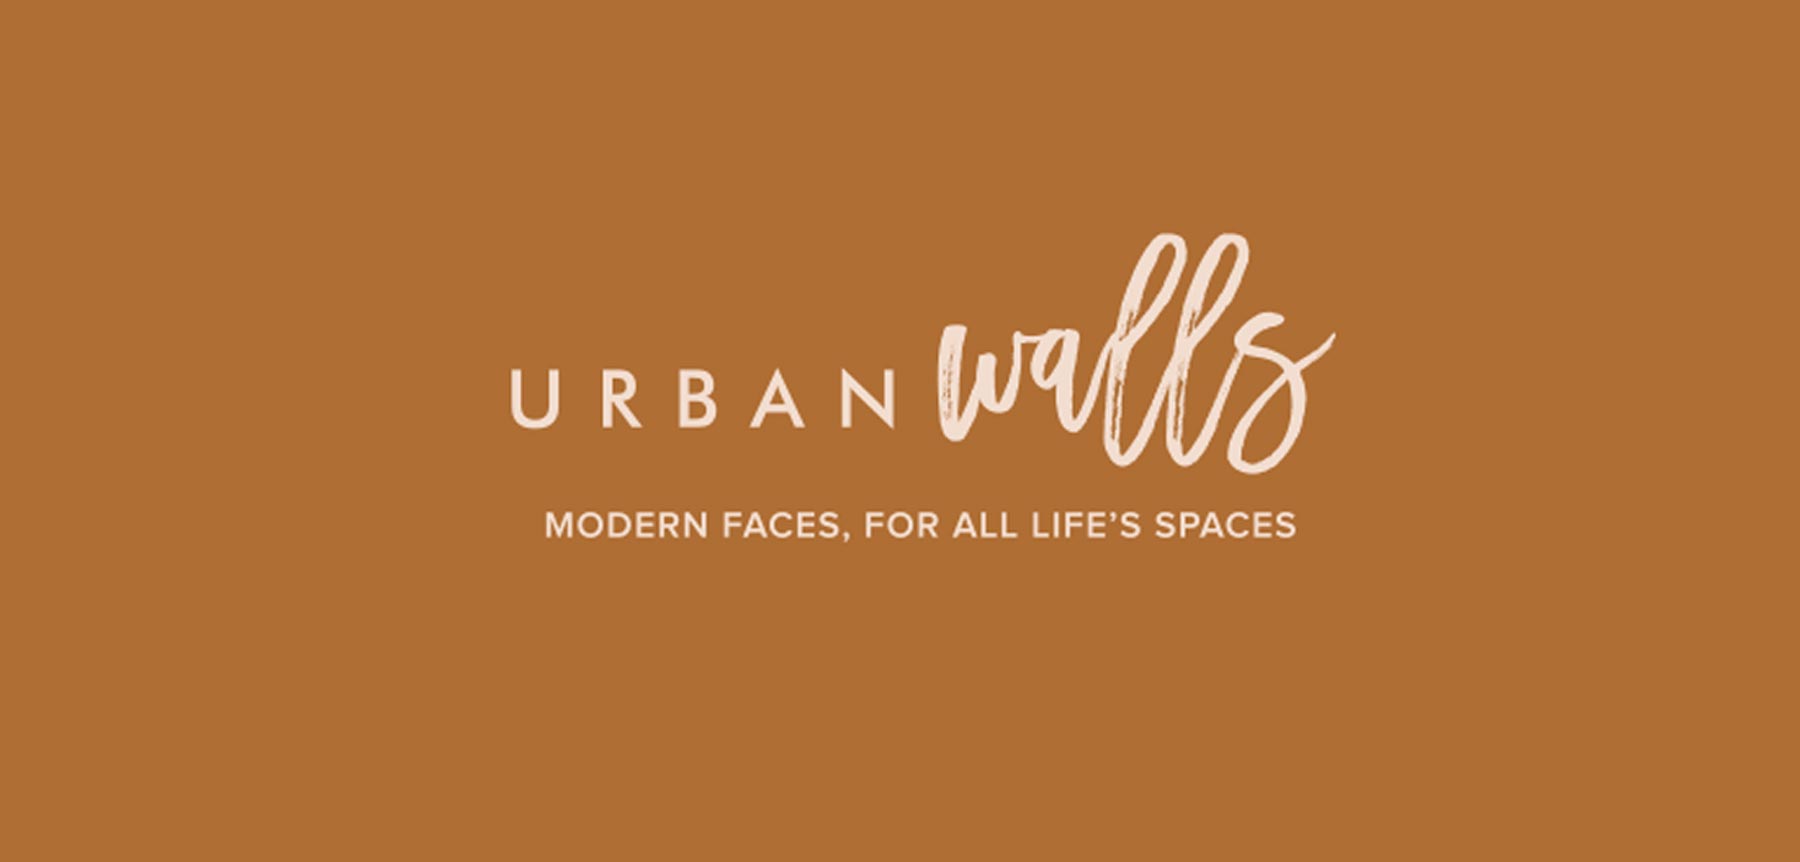 Urban-walls-logo-five-senses-branding